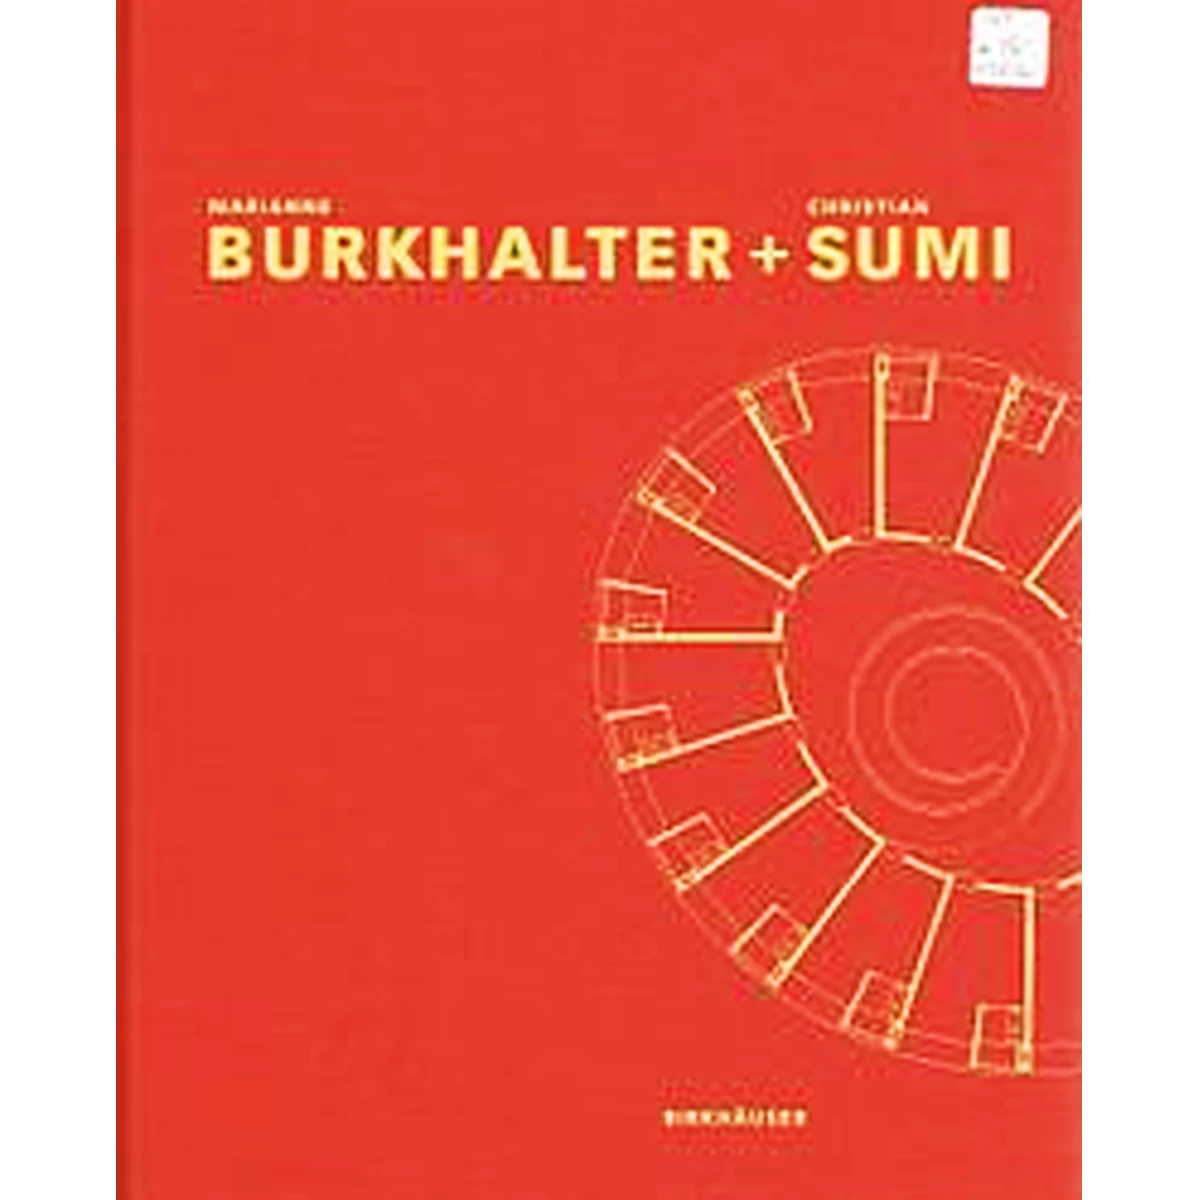 Burkhalter + Sumi